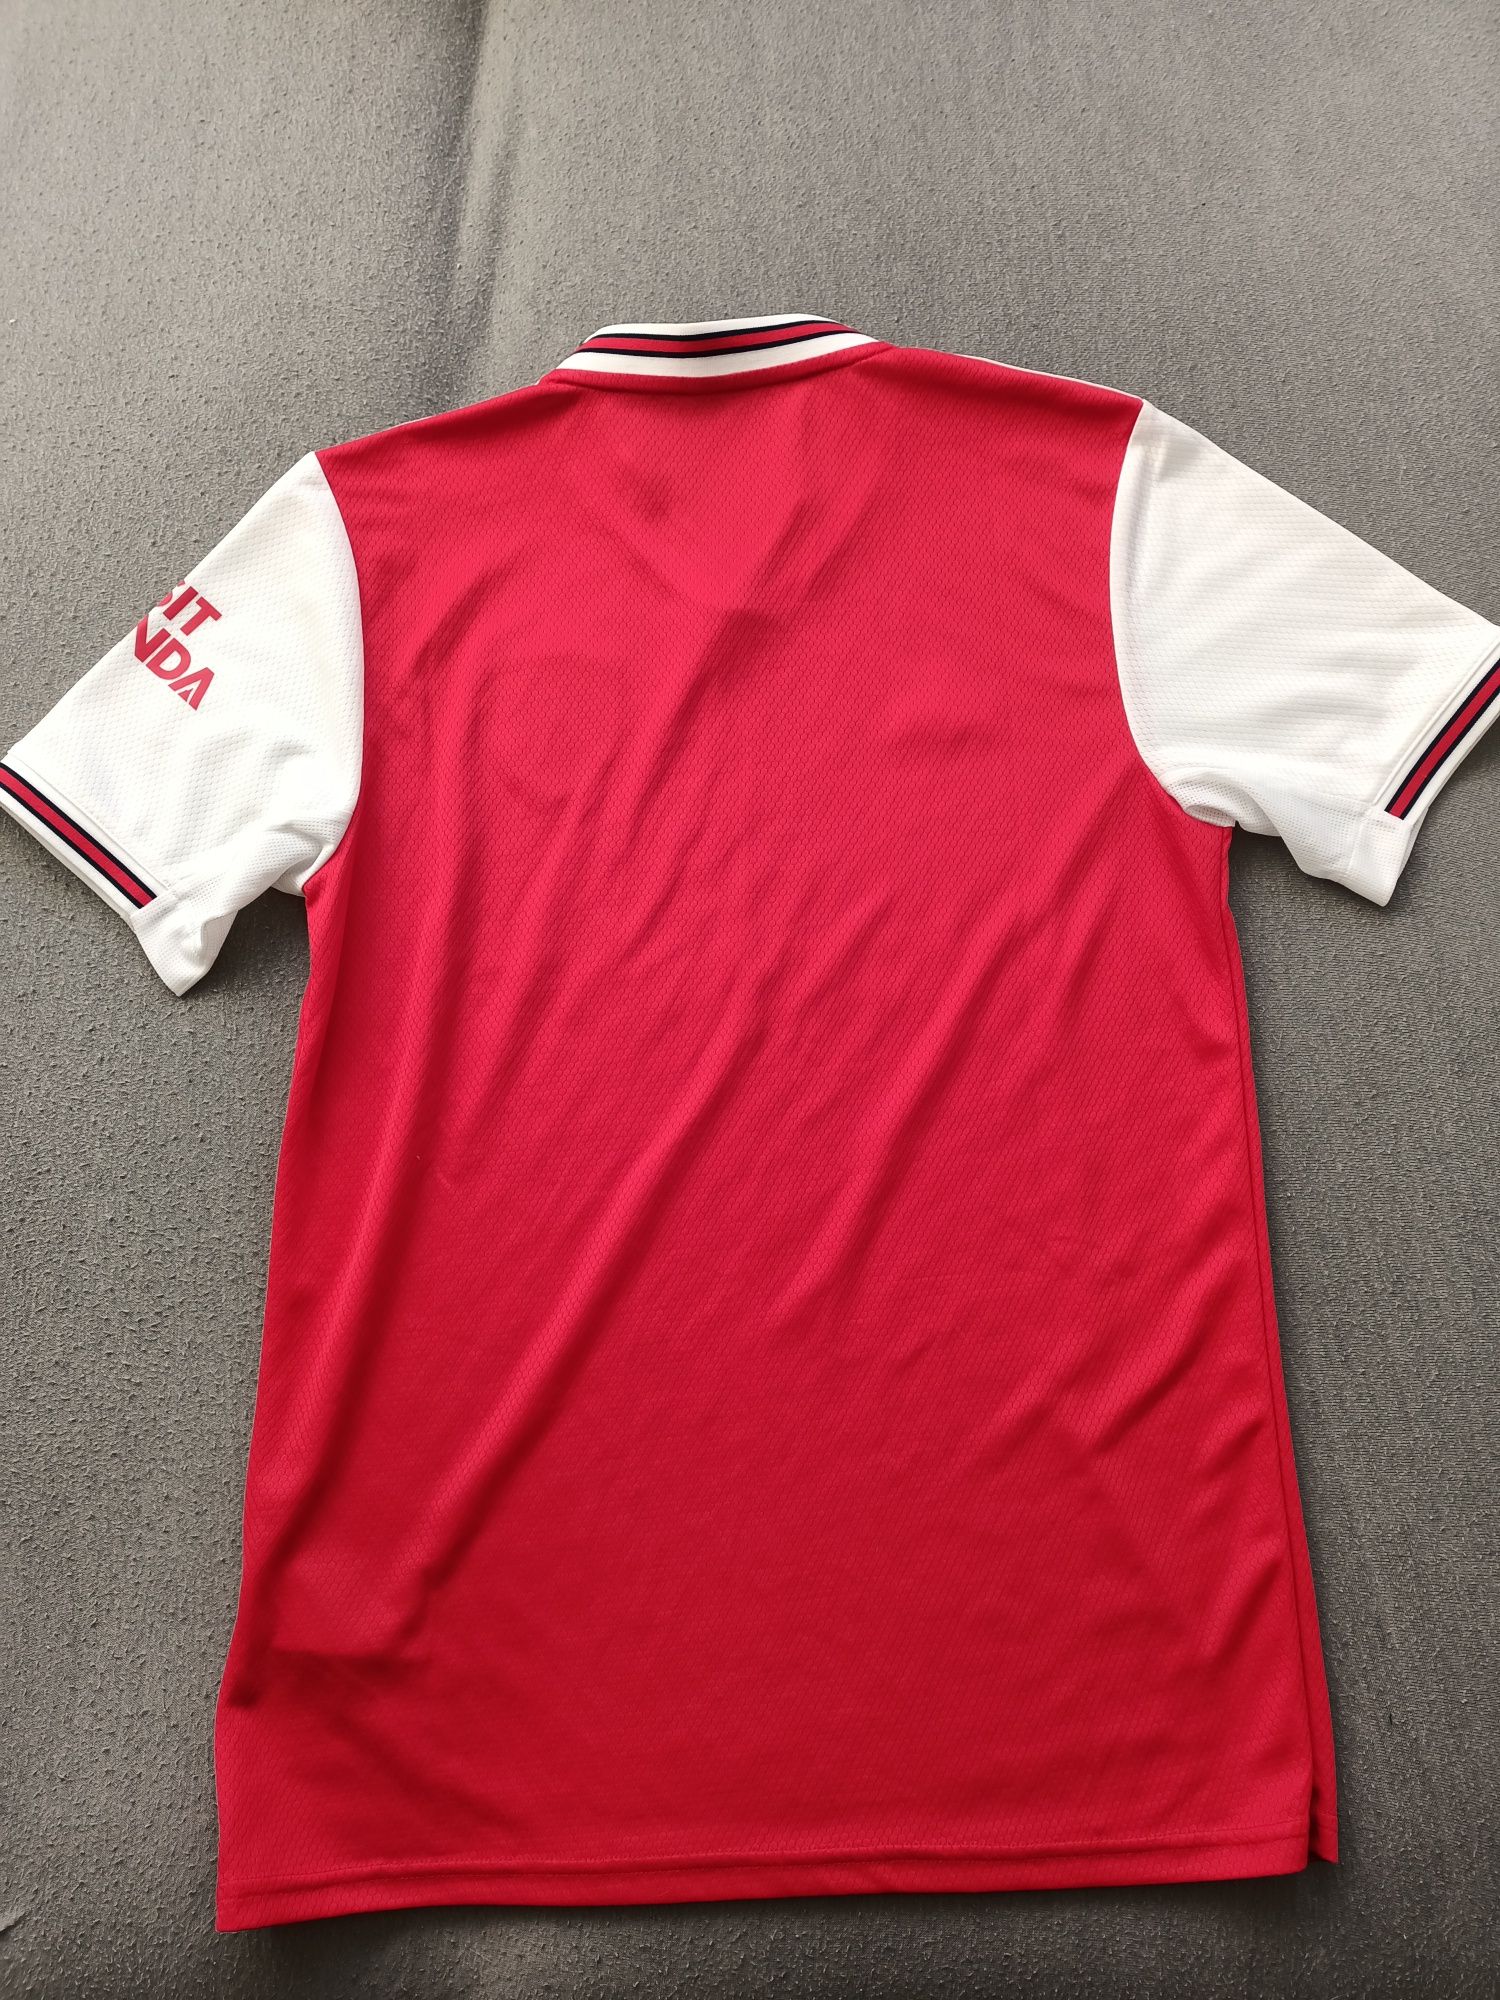 Koszulka Arsenal Londyn (adidas )